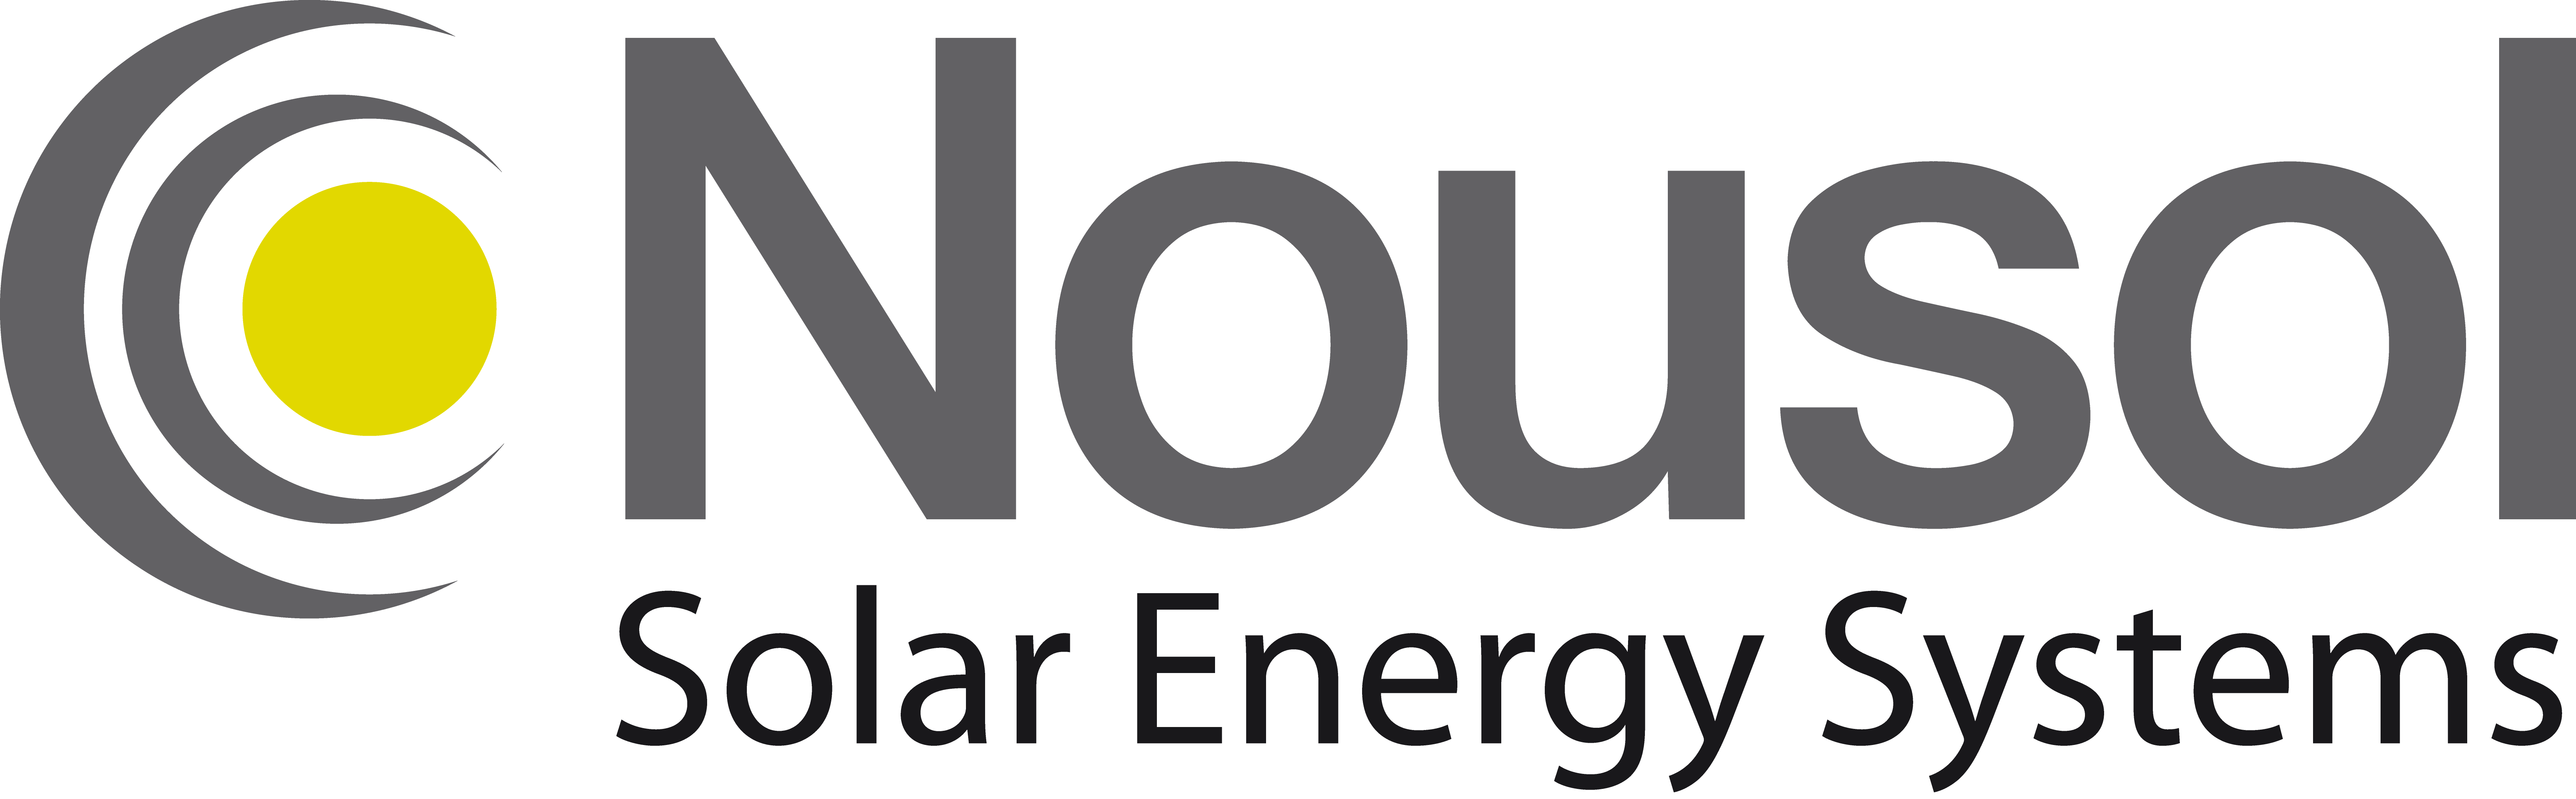 Nousol Solar Energy Systems